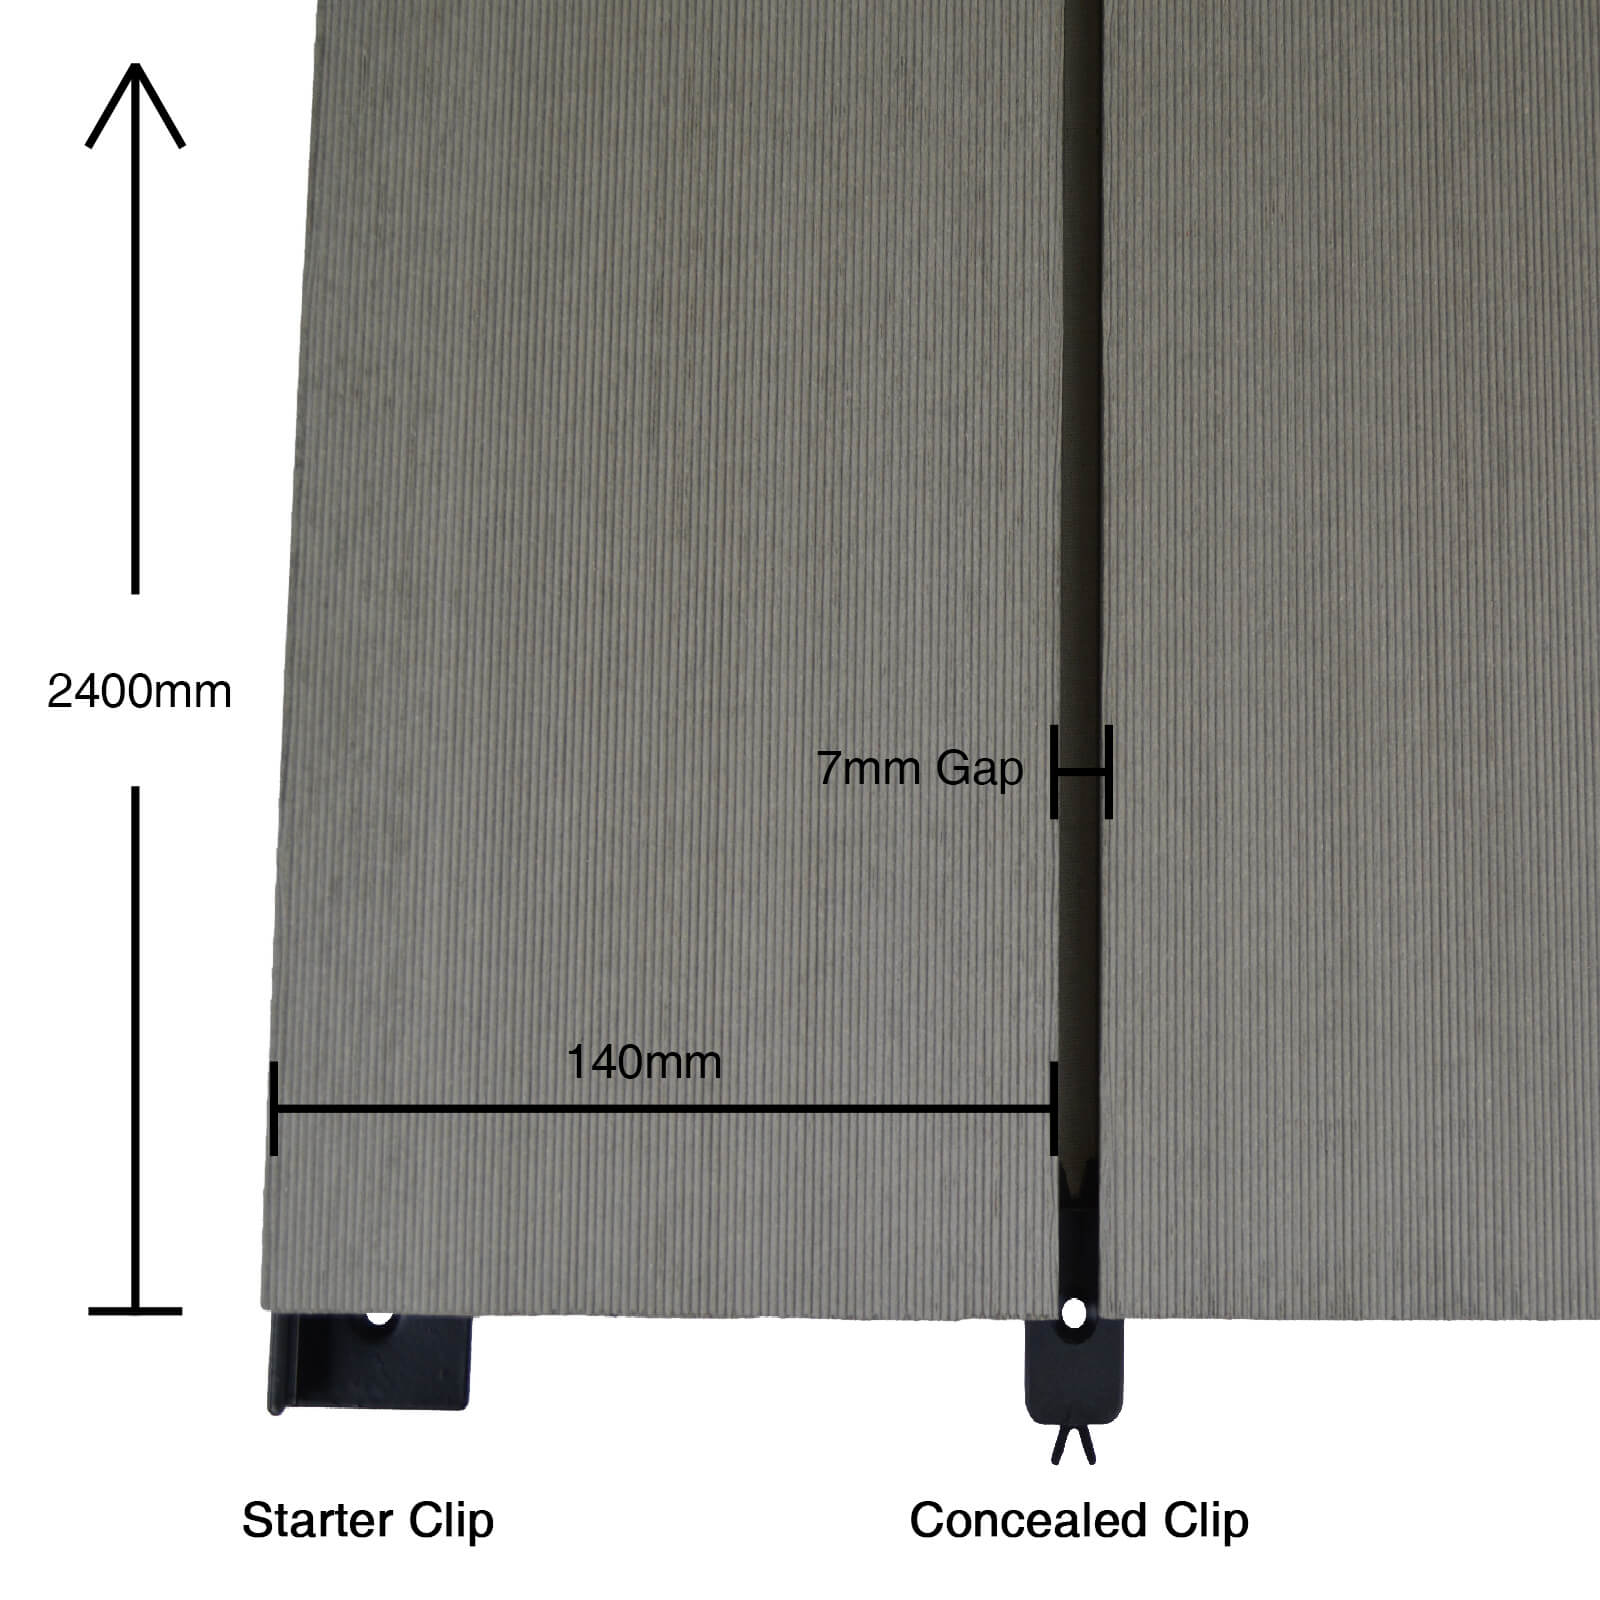 Bridge Board Composite Decking 30 Pack Grey - 10.44 m2